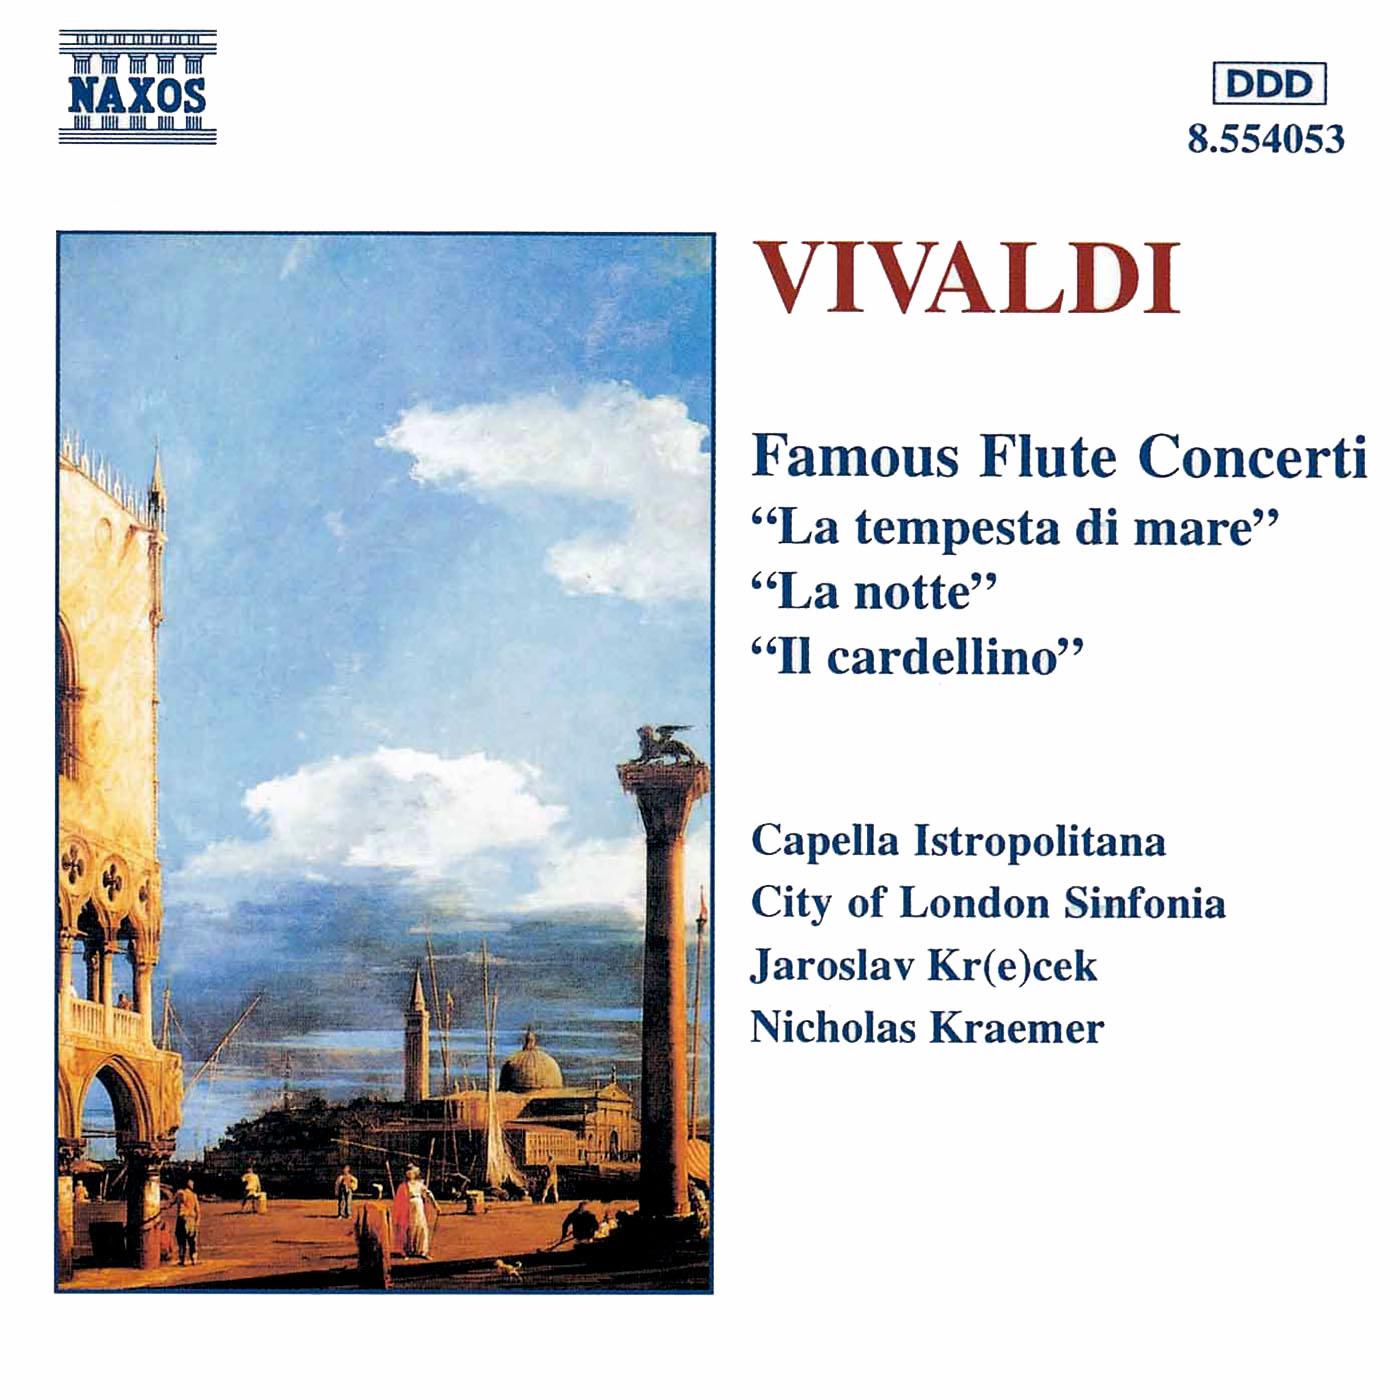 Flautino Concerto in C Major, RV 443*: I. Allegro